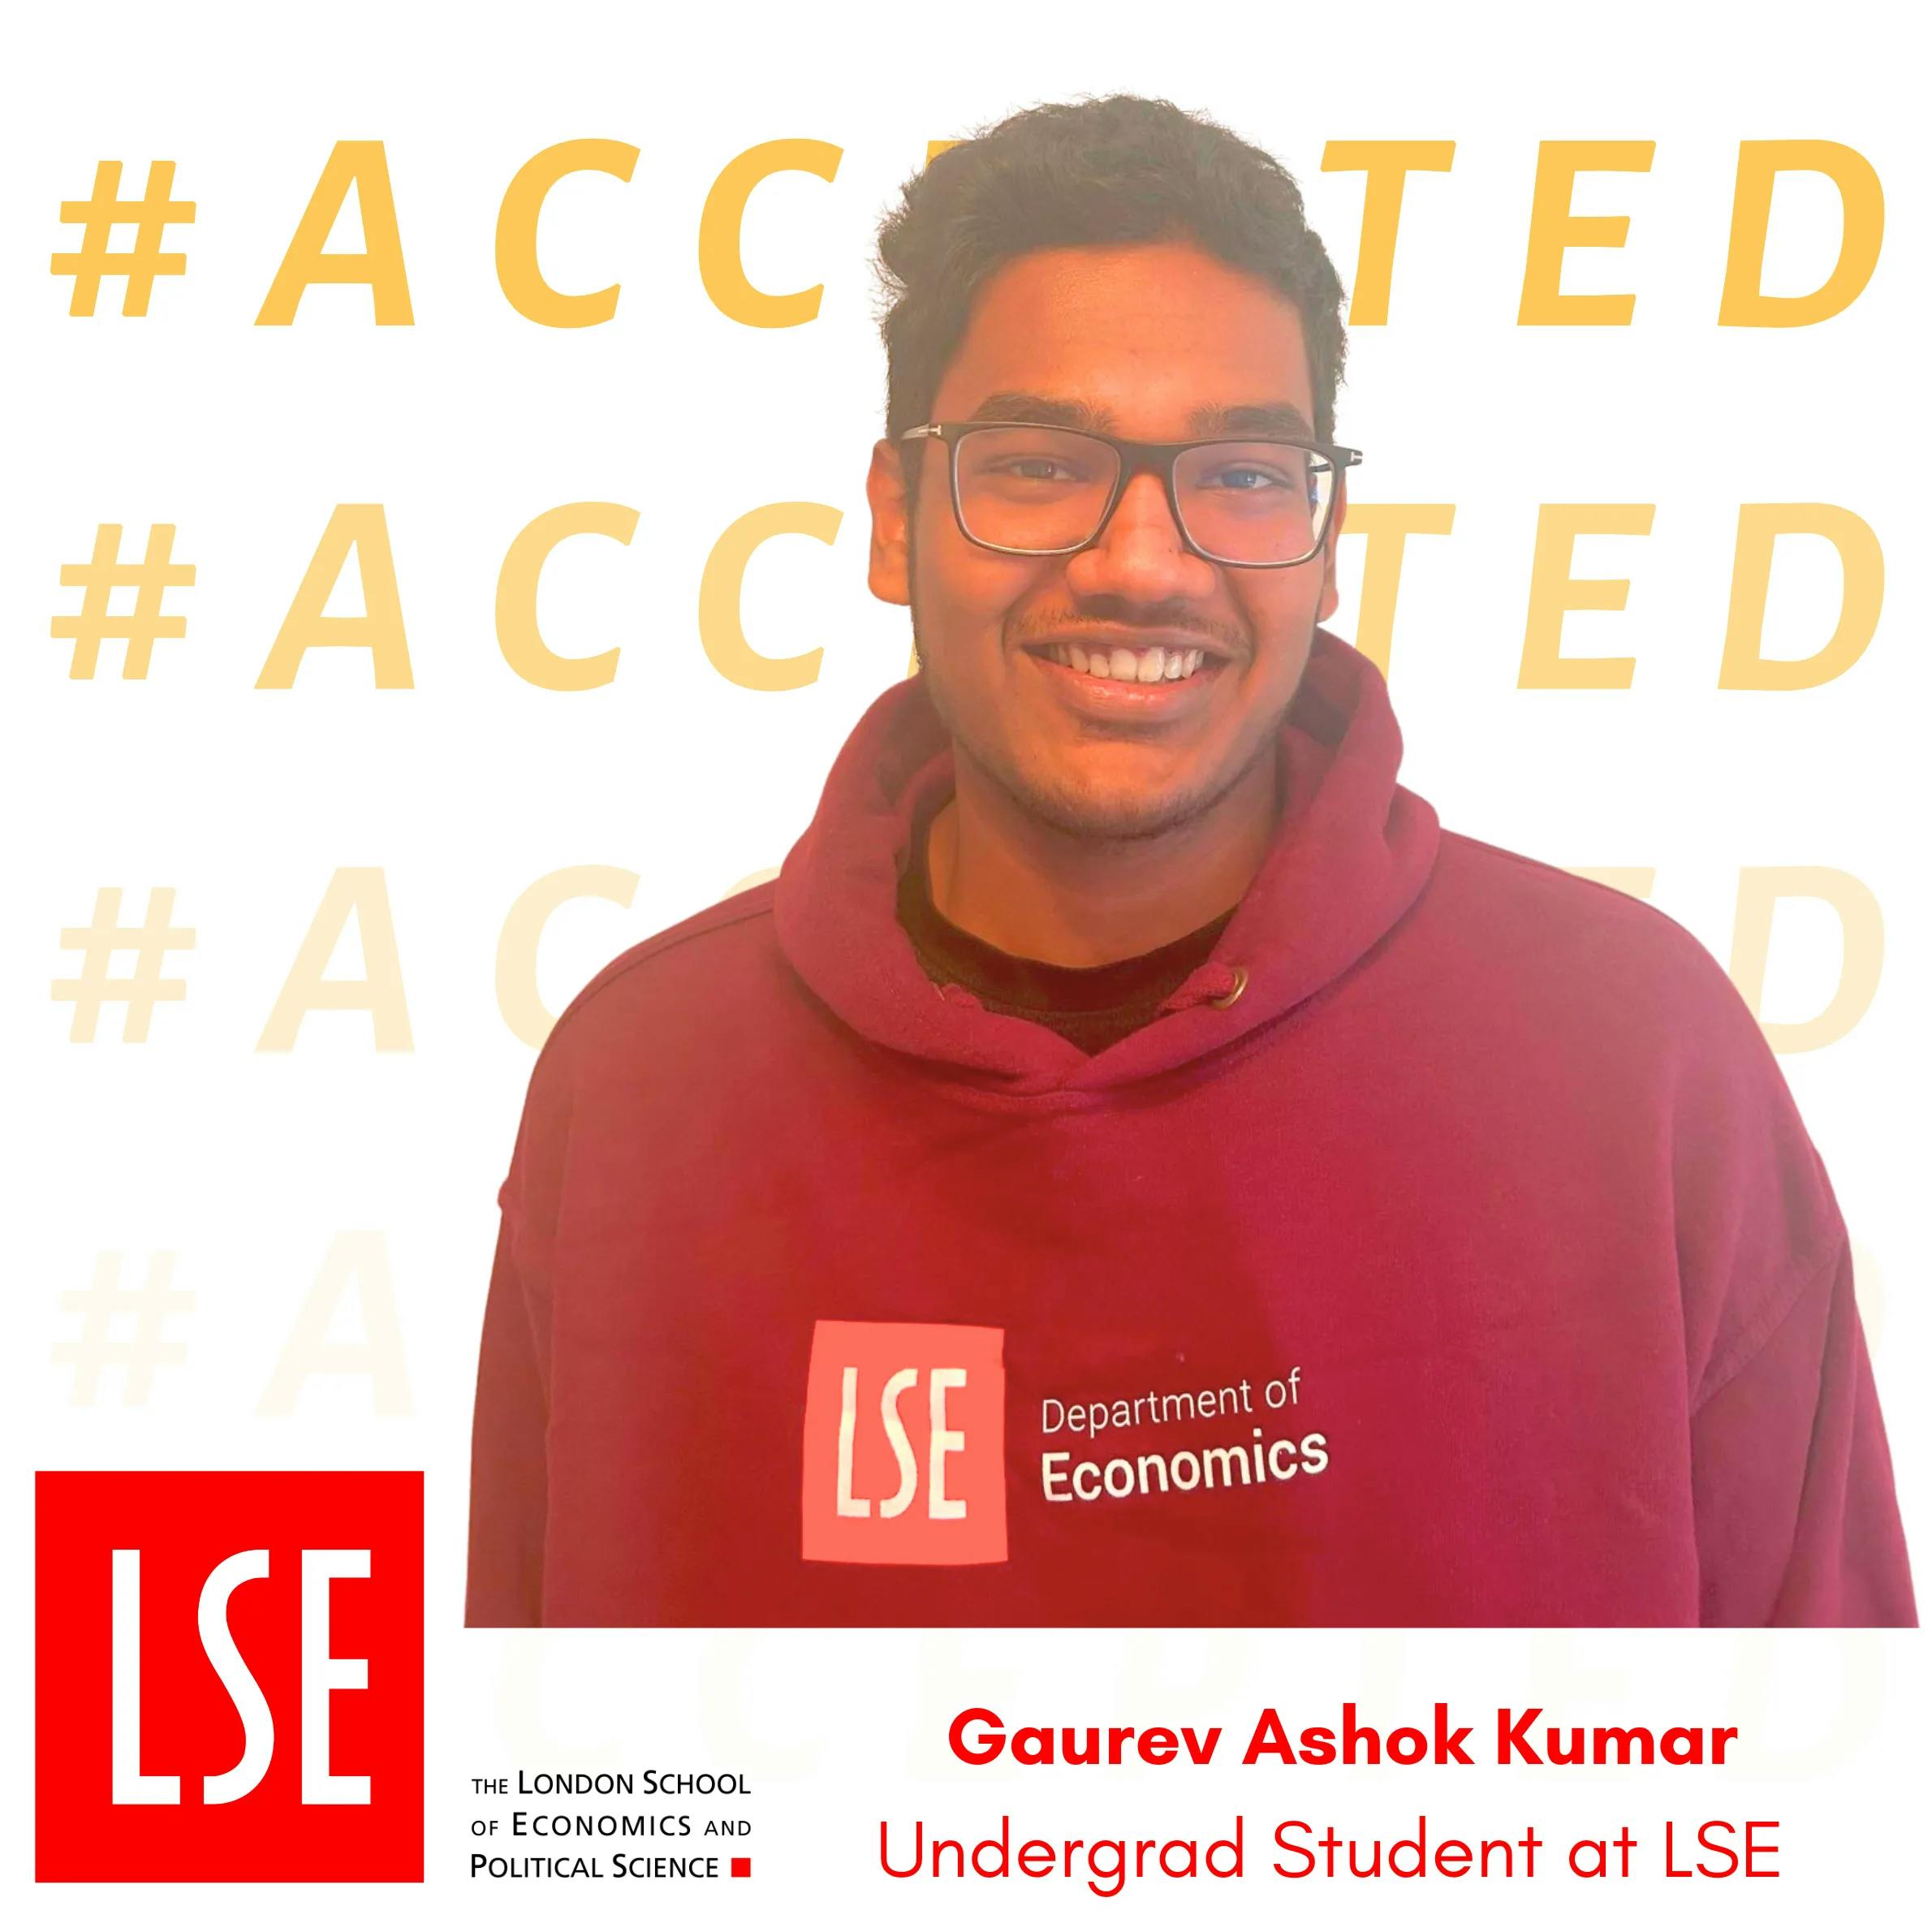 Gaurev Ashok Kumar admitted to London School of Economics and Political Science